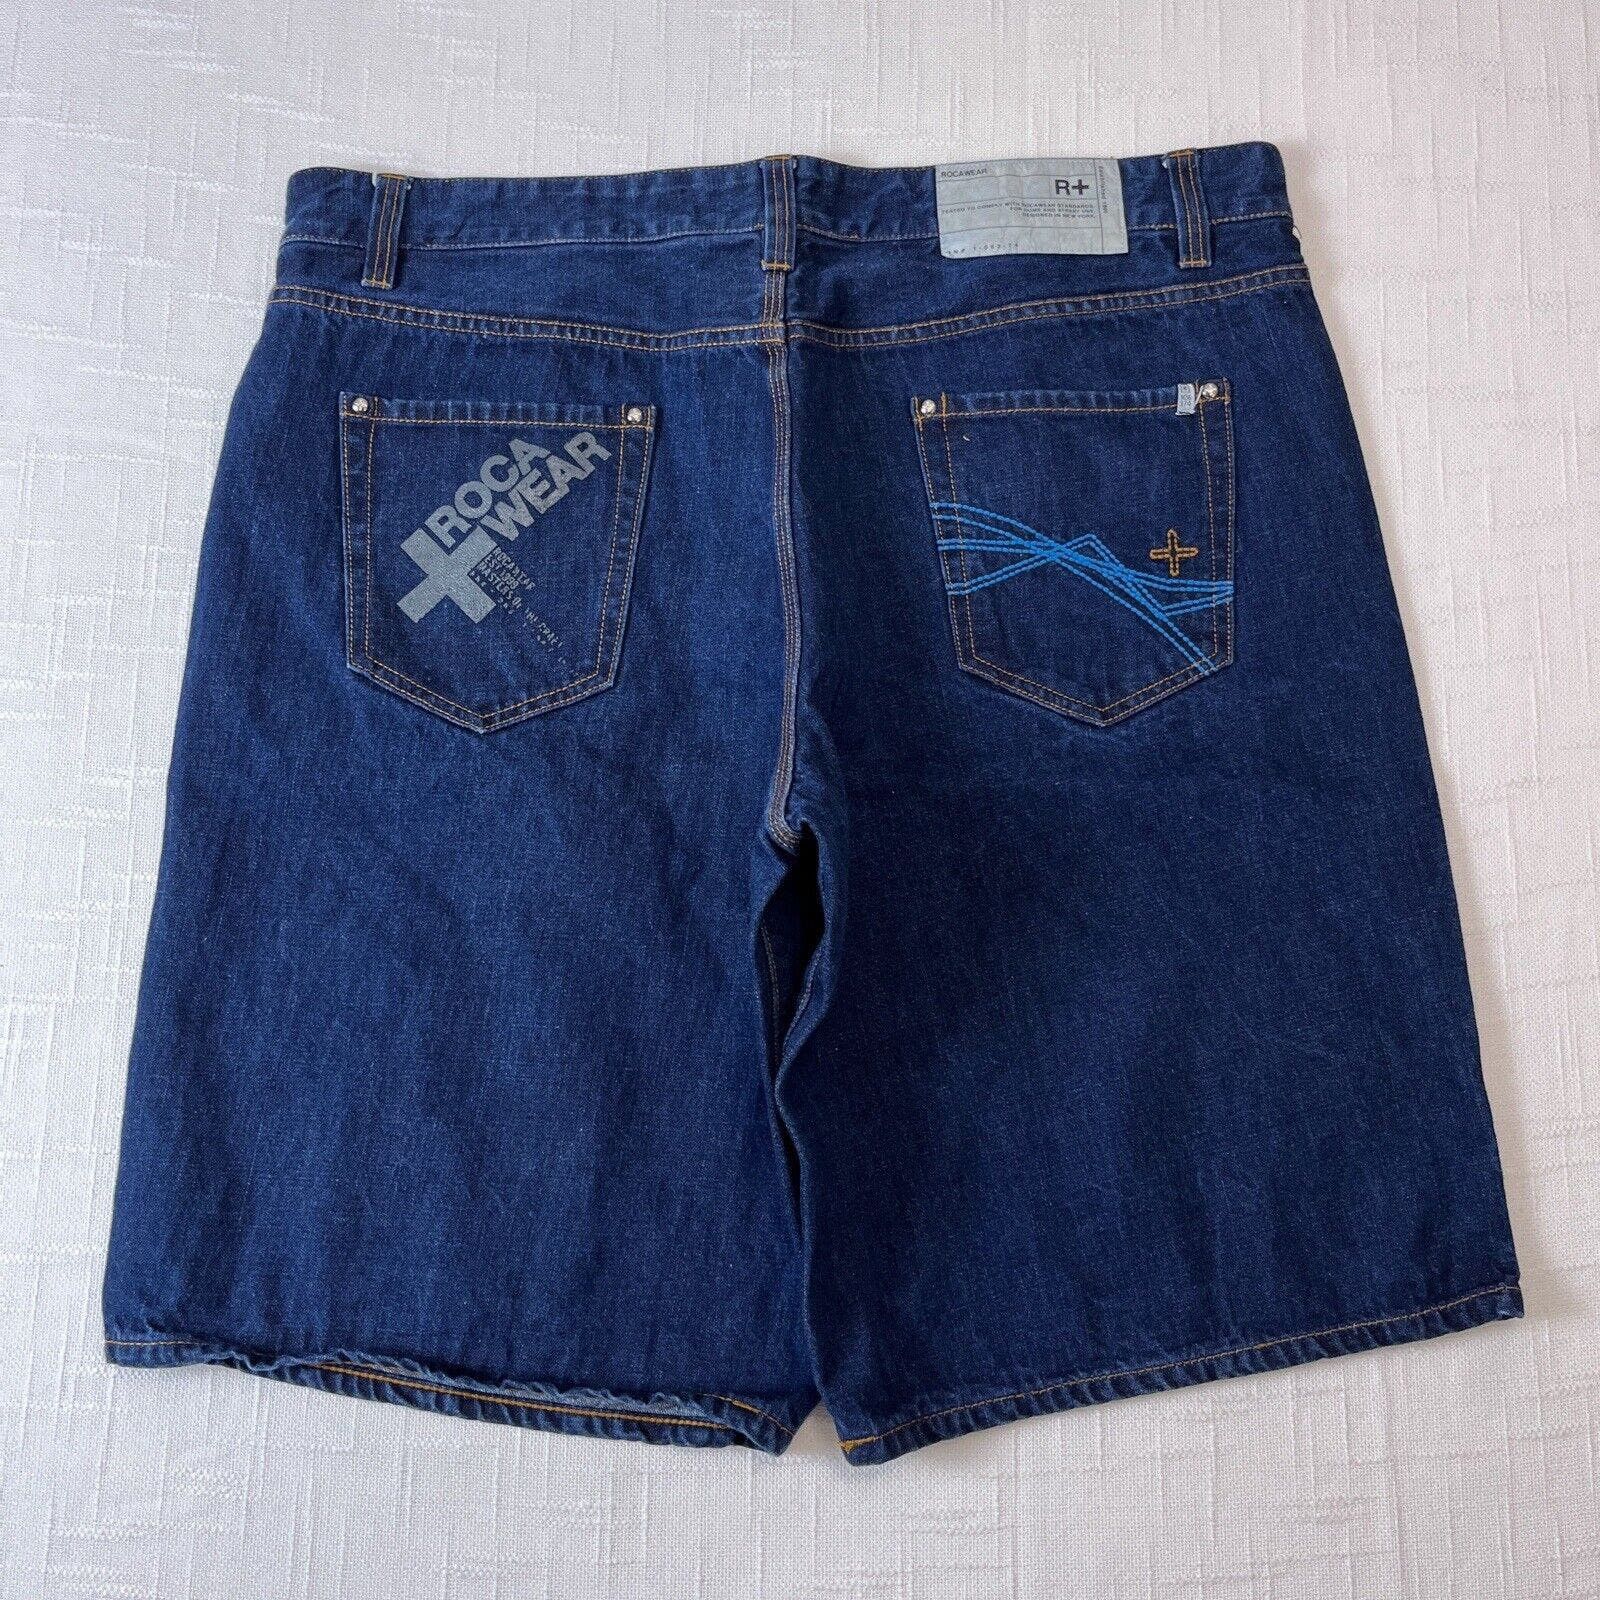 Vintage Y2K Rocawear Jean Shorts 45x13 Baggy Long Cyber Grunge Skate Size US 44 / EU 60 - 1 Preview